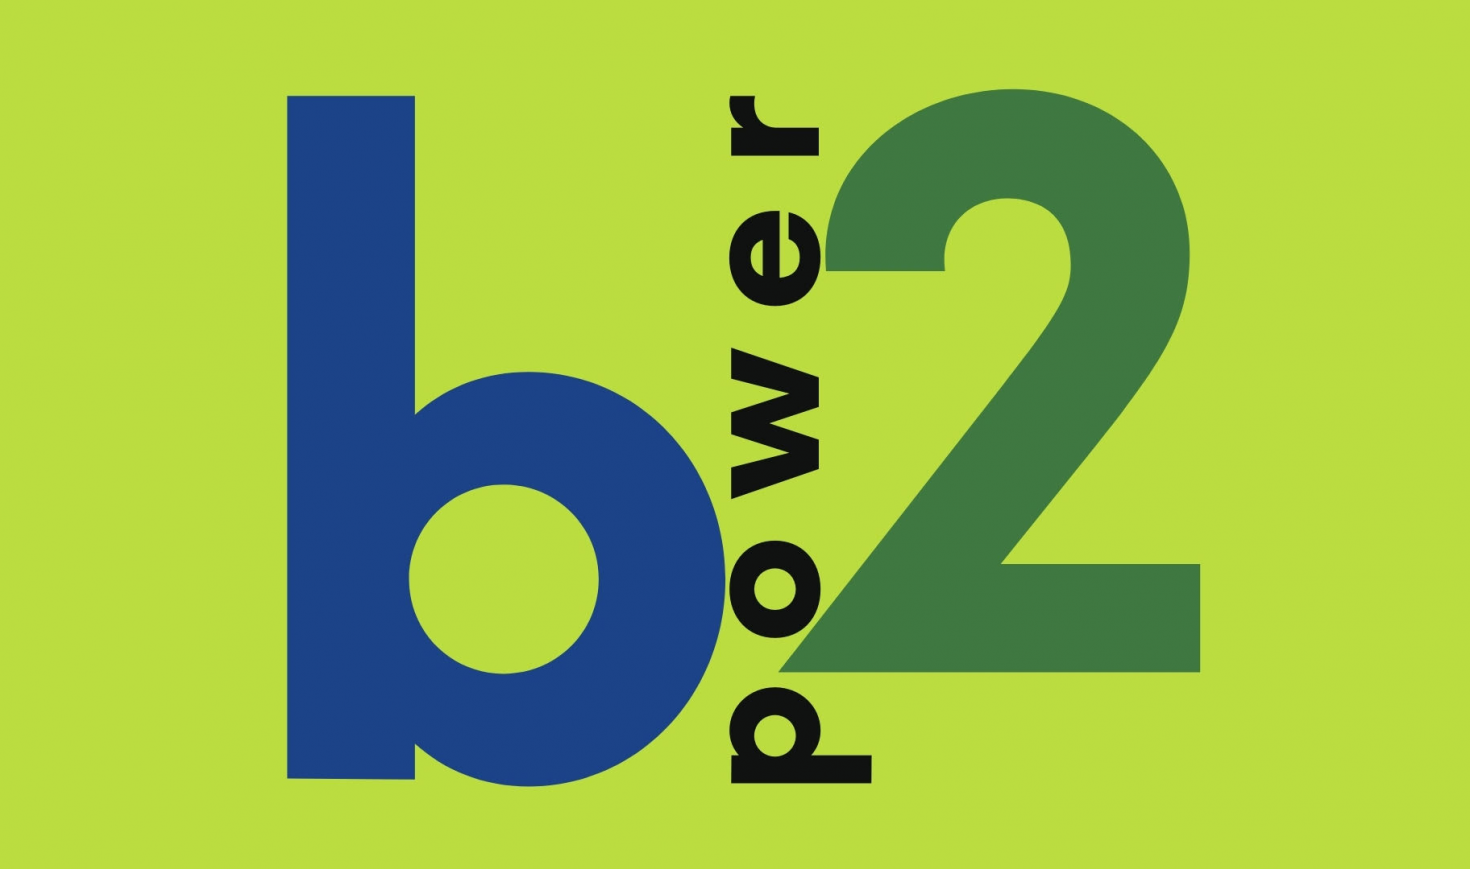 Bpower2 logo